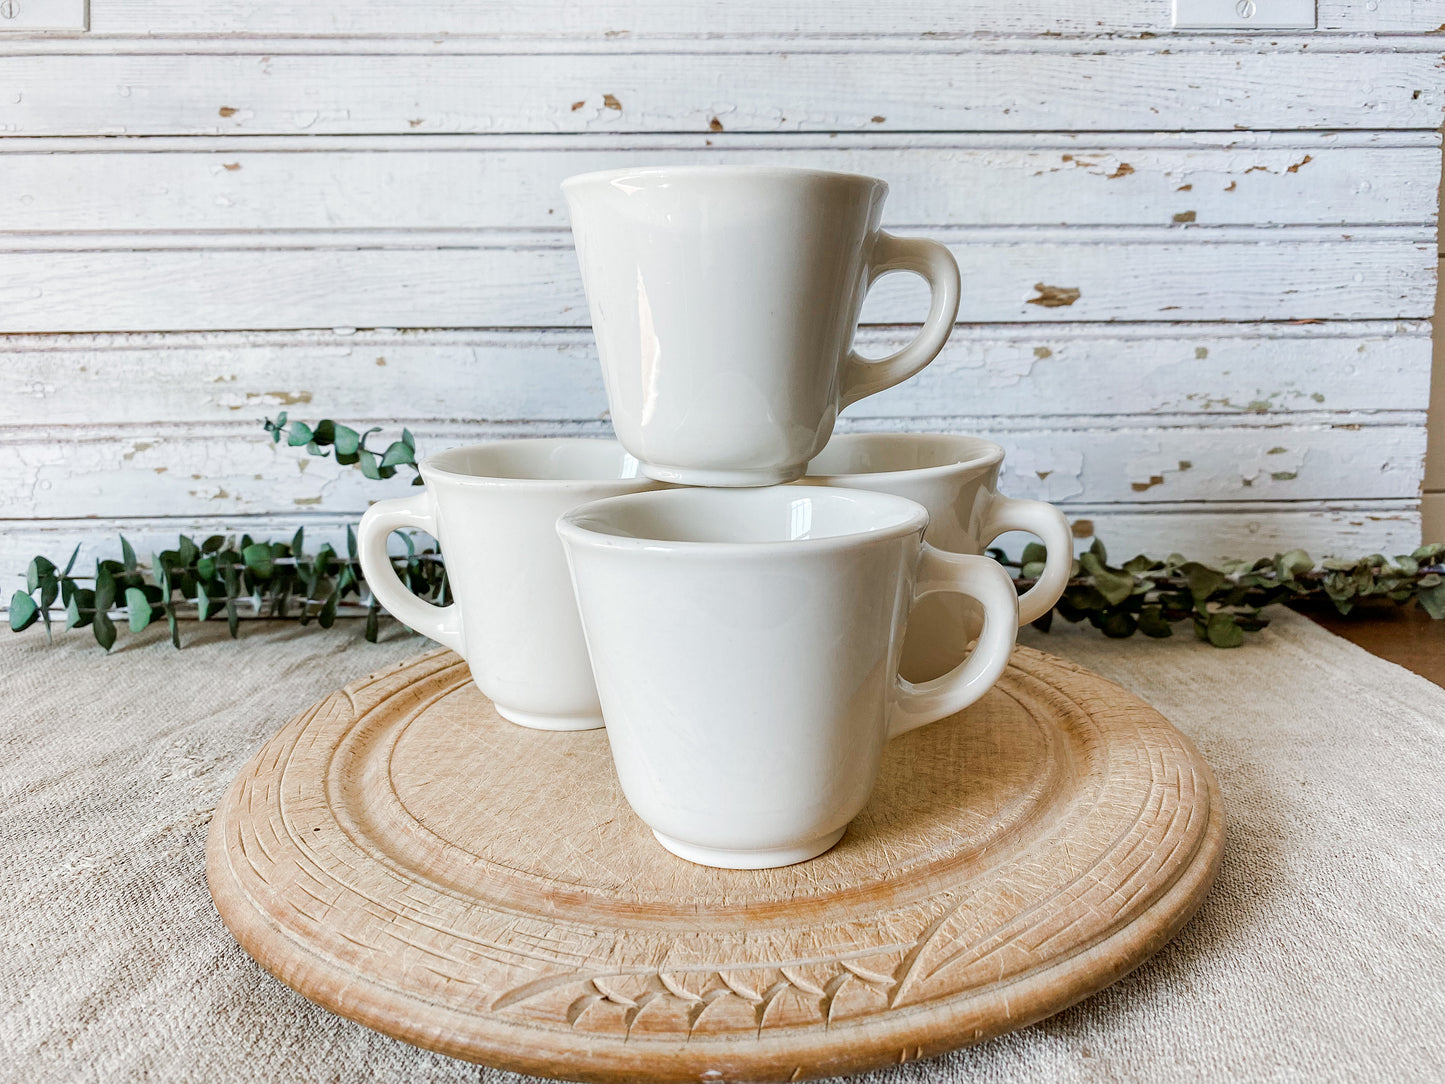 Set of 6 Pottery Espresso Cups in White